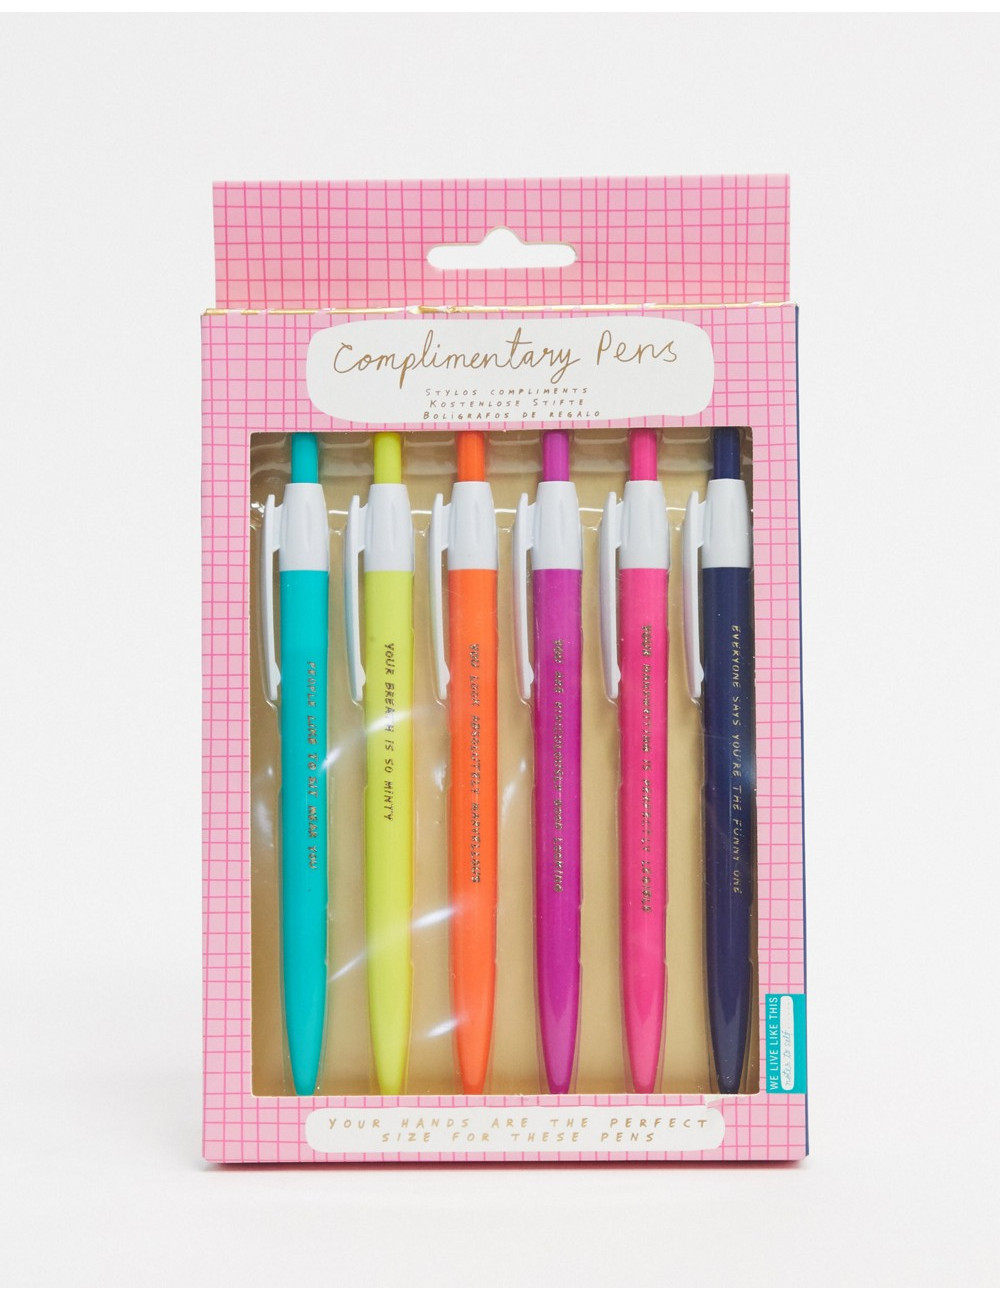 NPW complimentary pen set